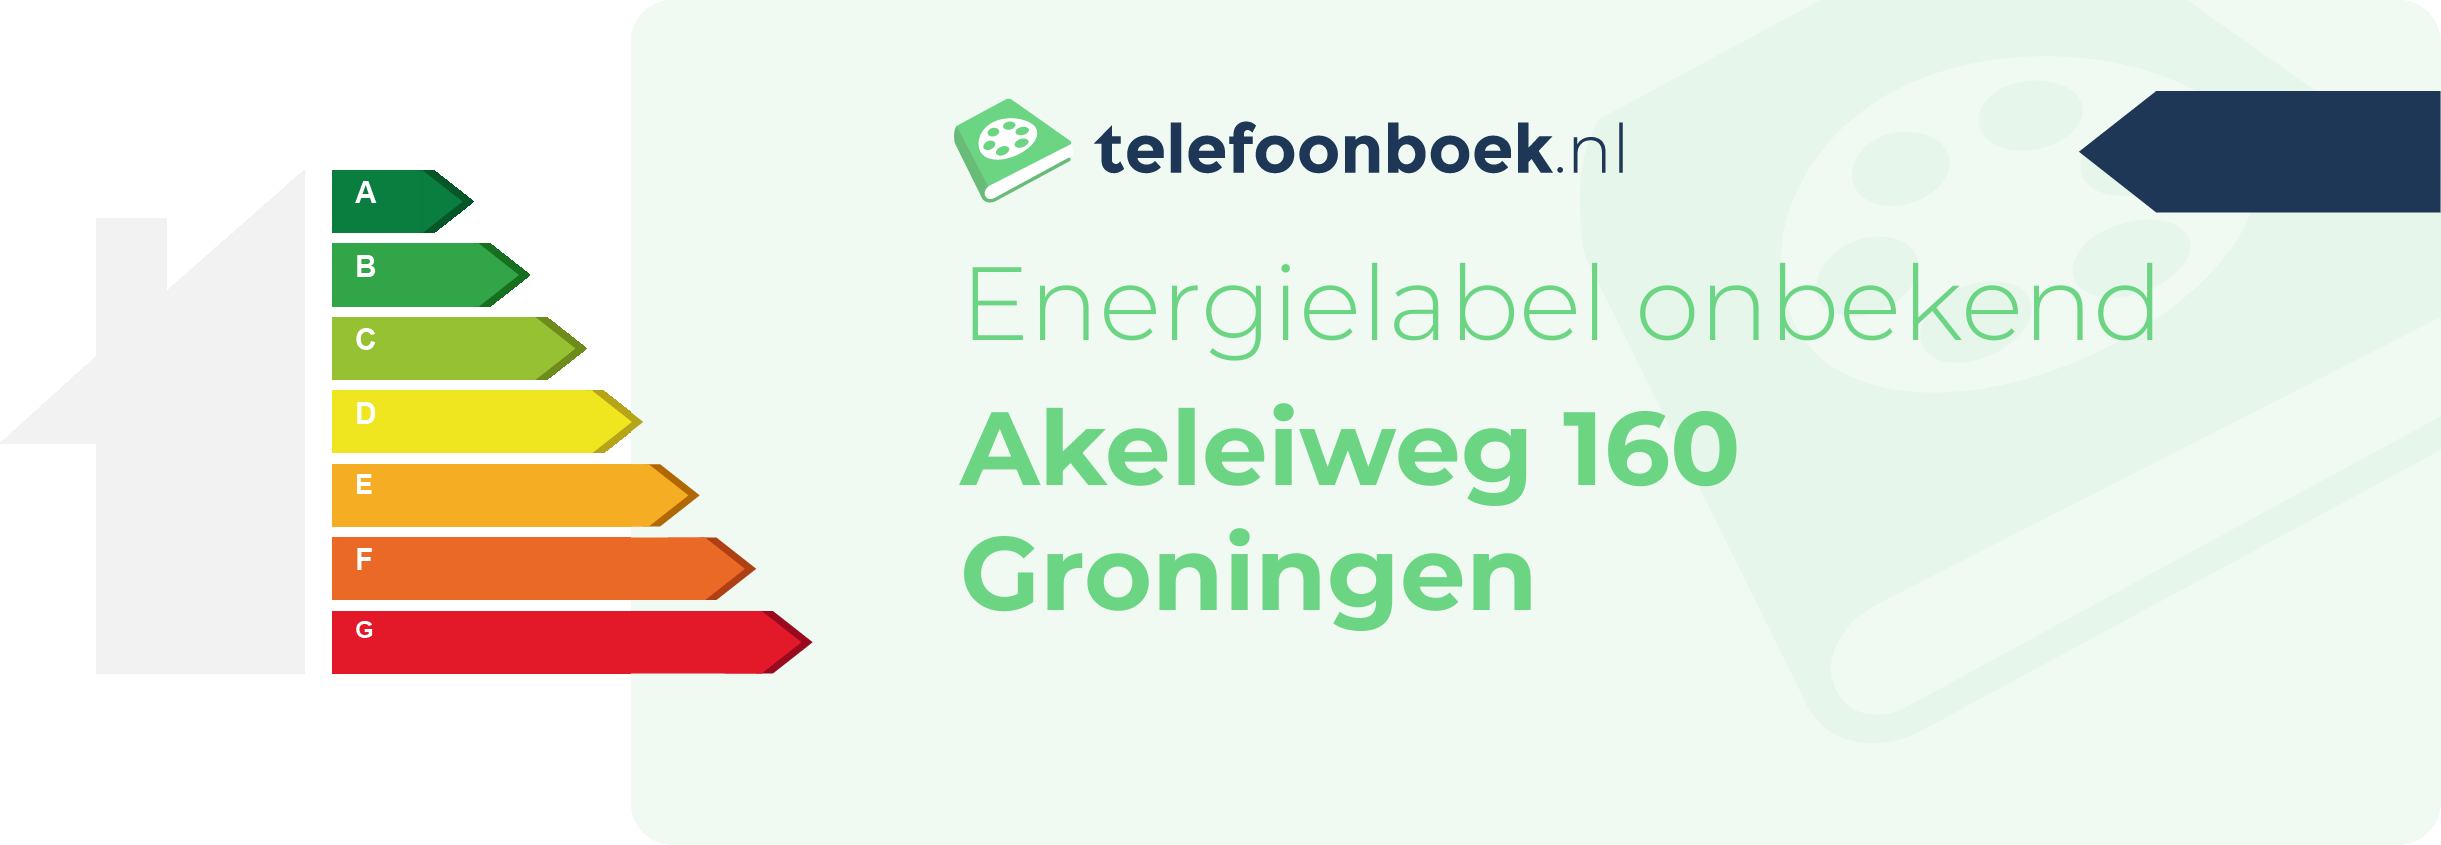 Energielabel Akeleiweg 160 Groningen